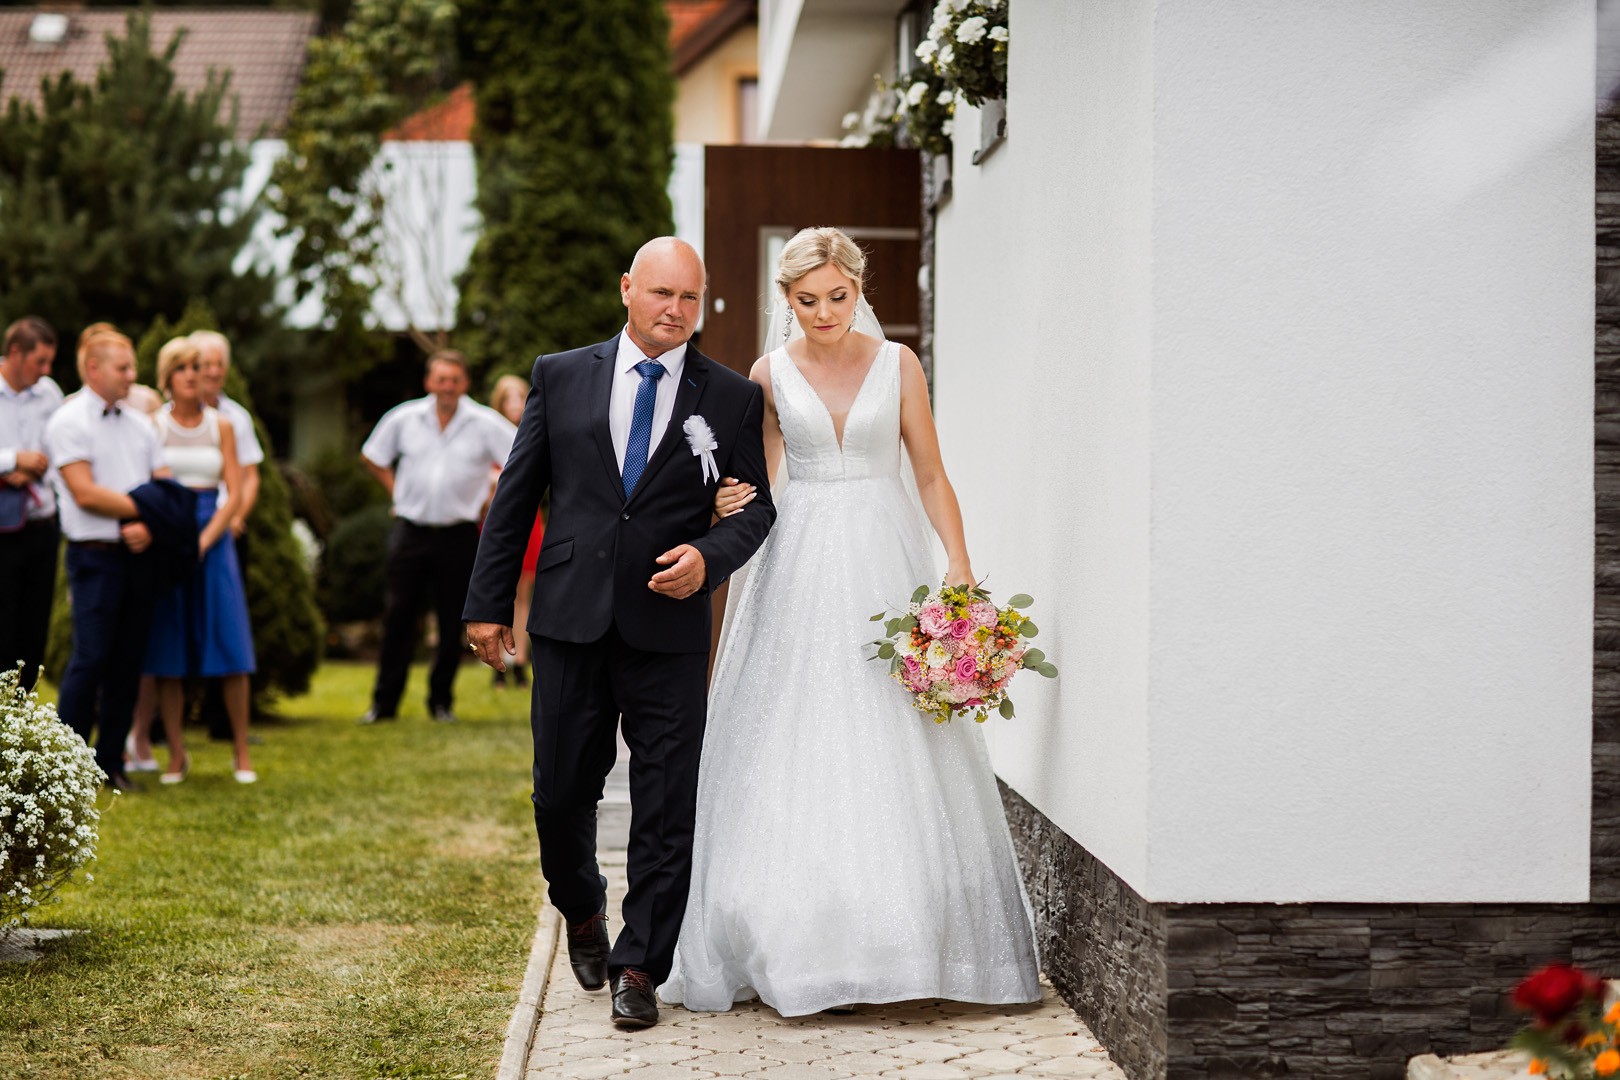 Wedding photos from the wedding day of Miška and Stanka. - 0180.jpg